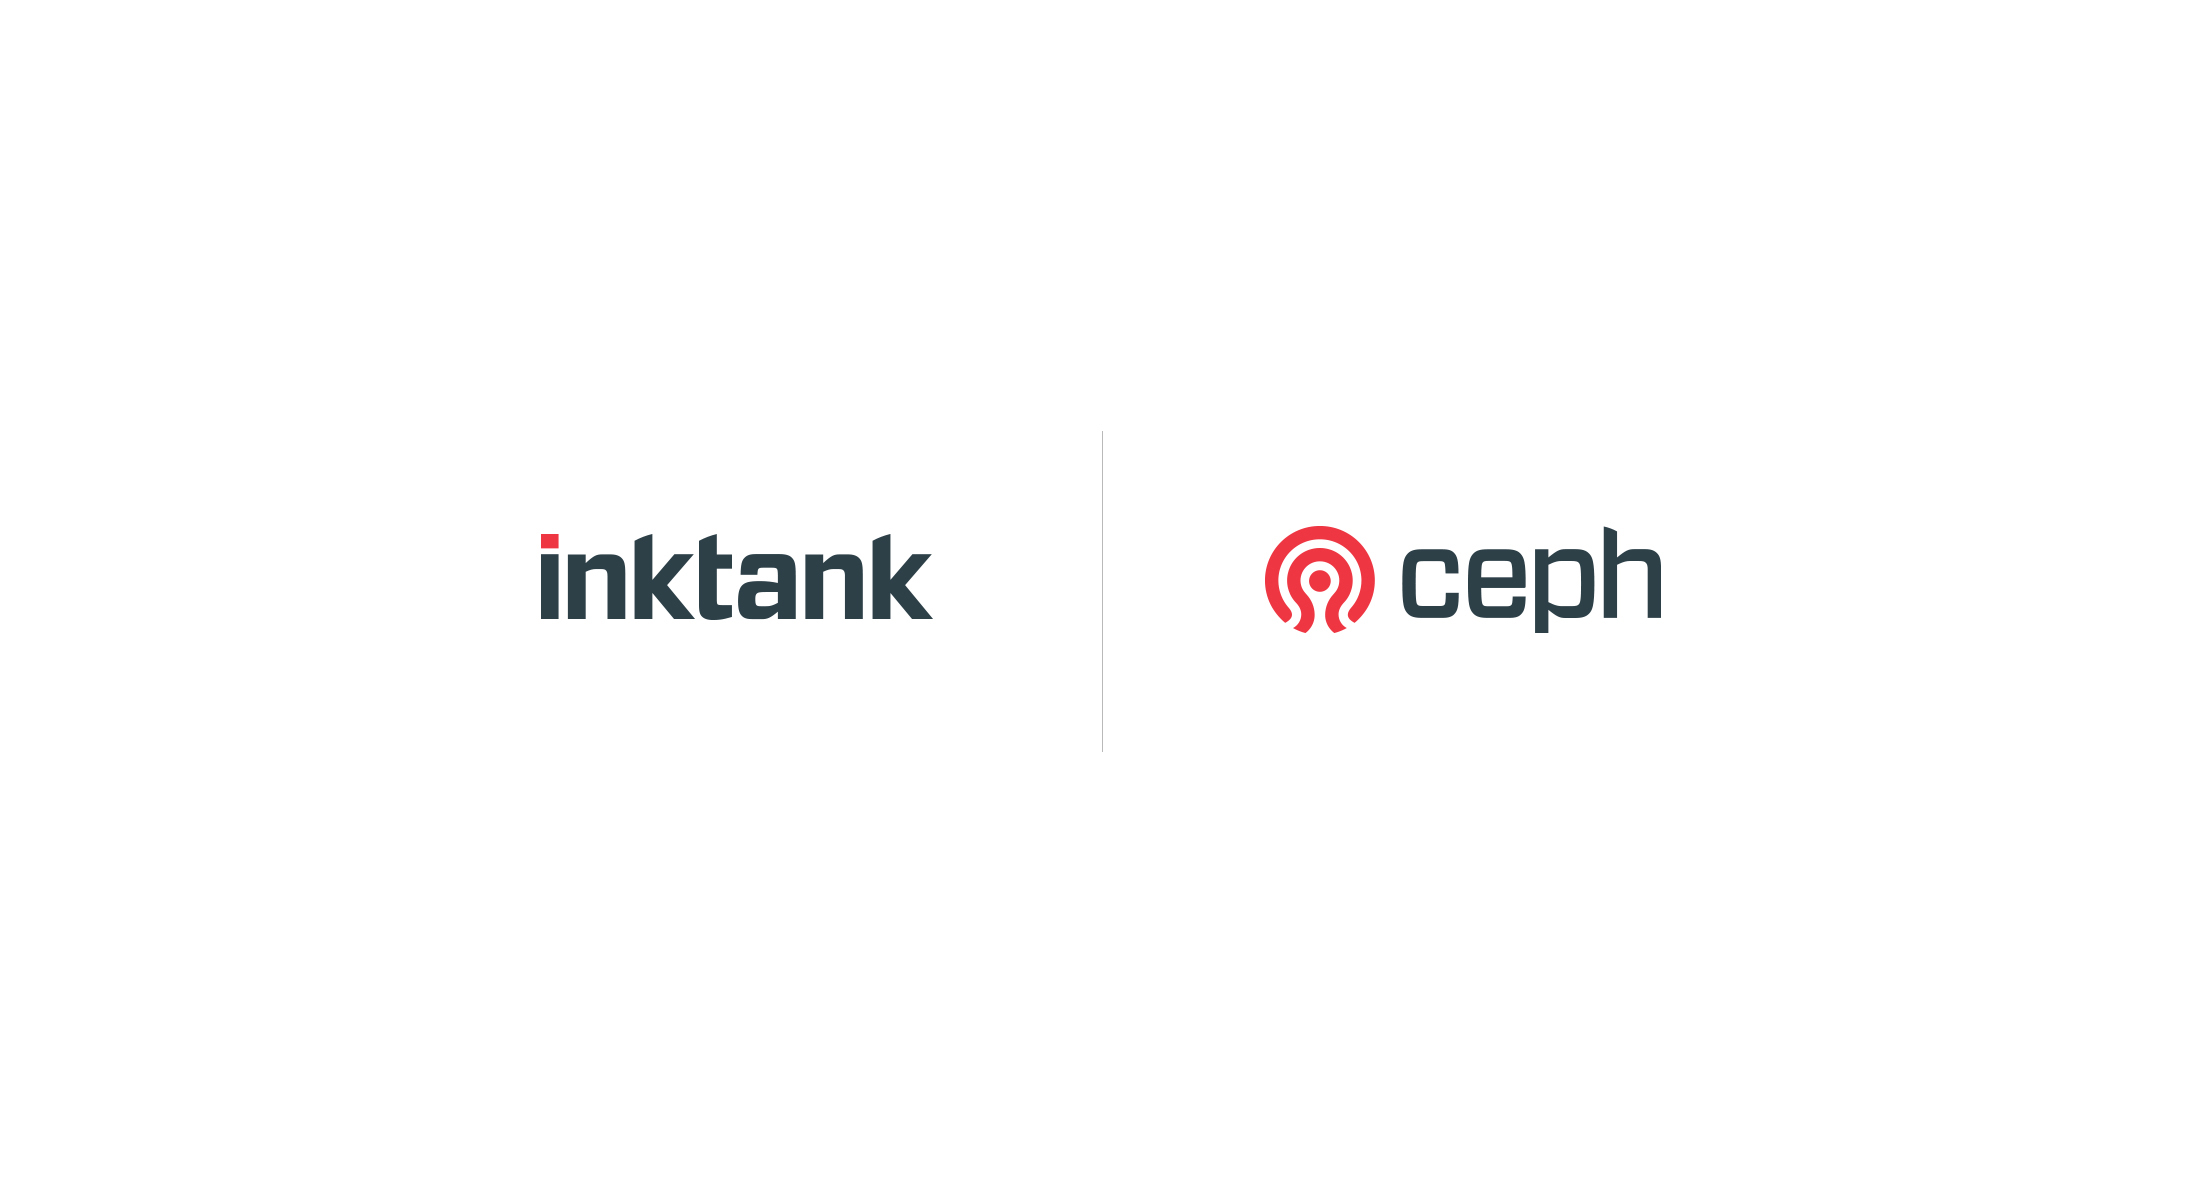 inktank_ceph_logos_new3